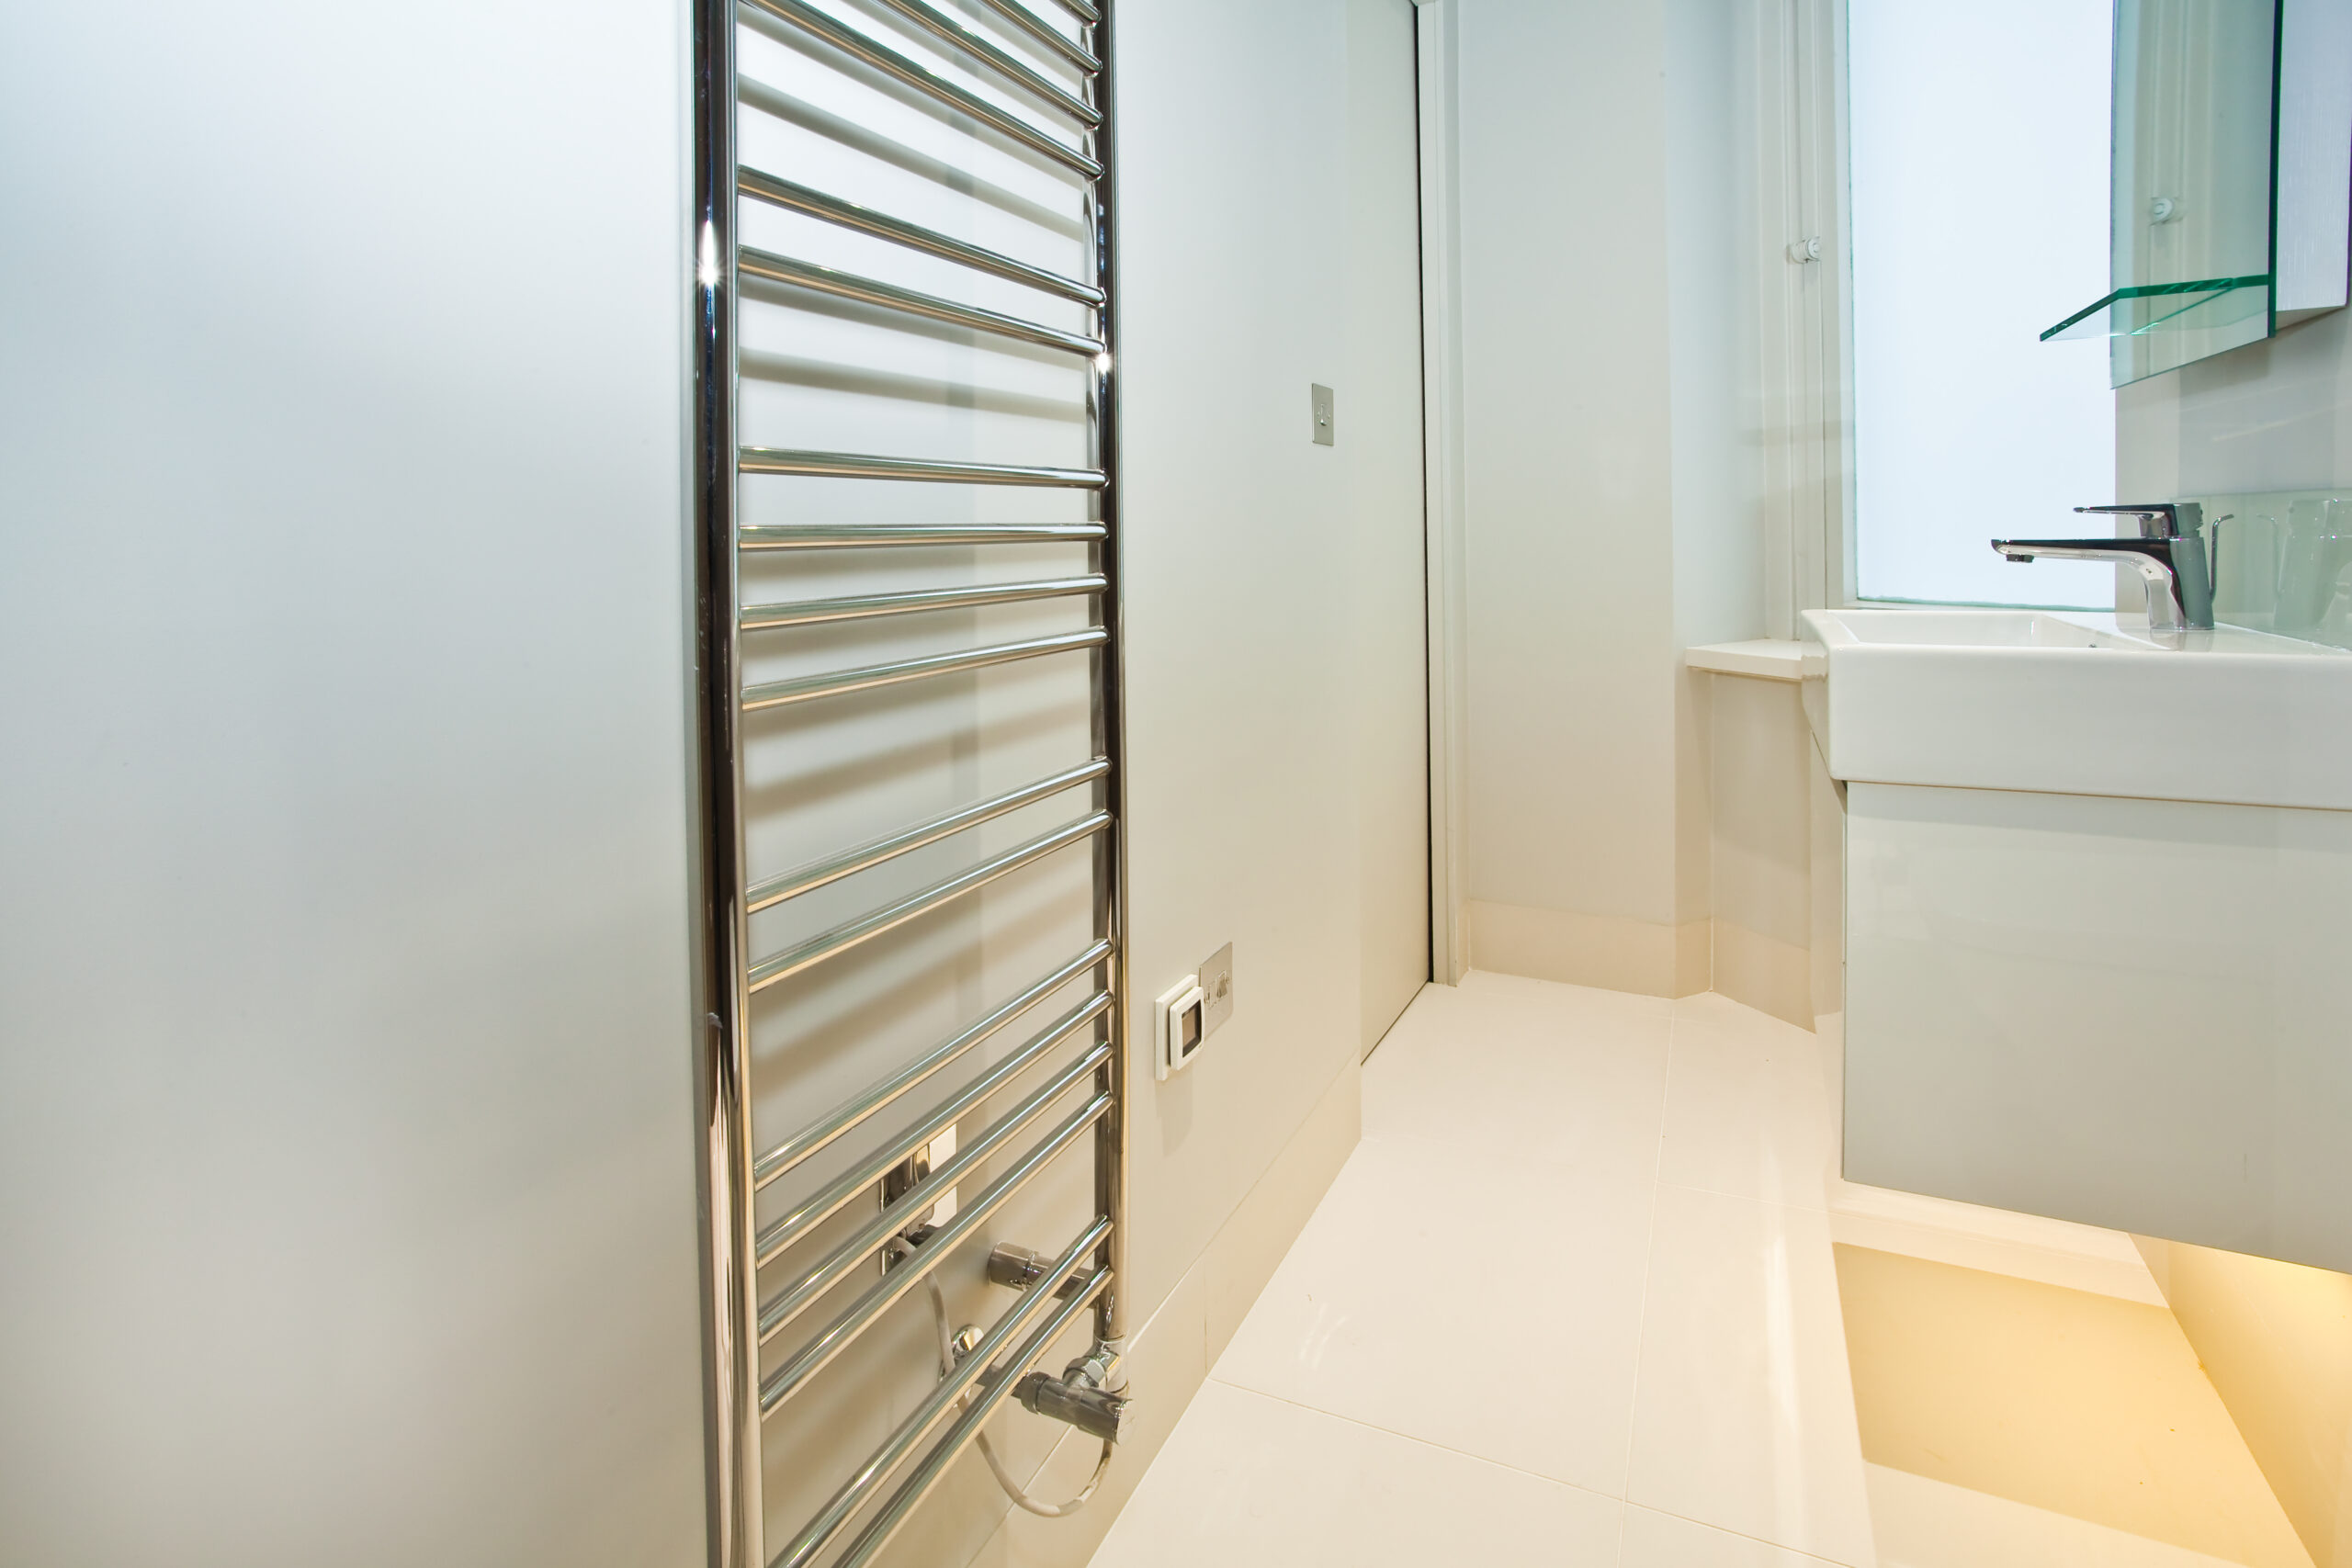 A Stainless Steel Towel Rack in a Bathroom